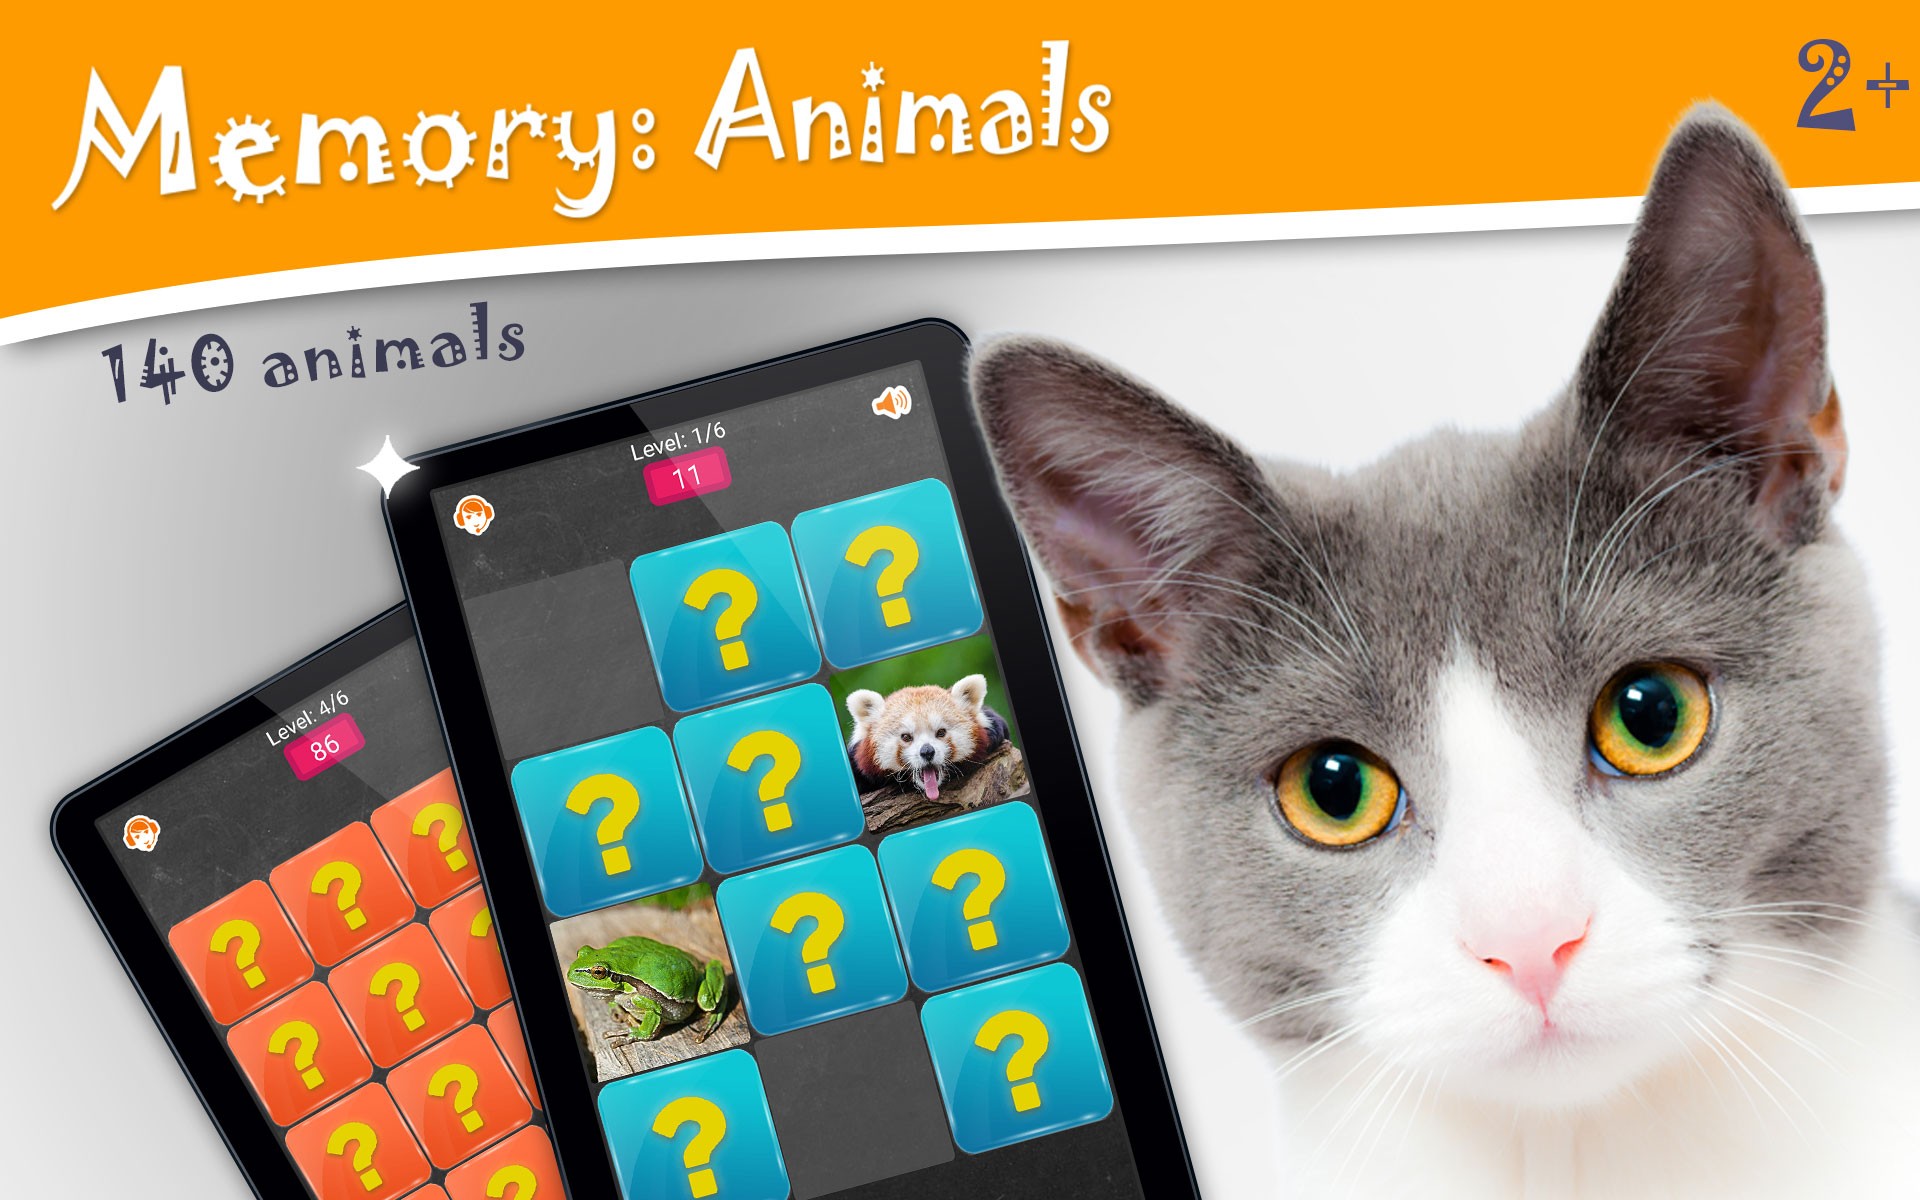 Memory: Animals